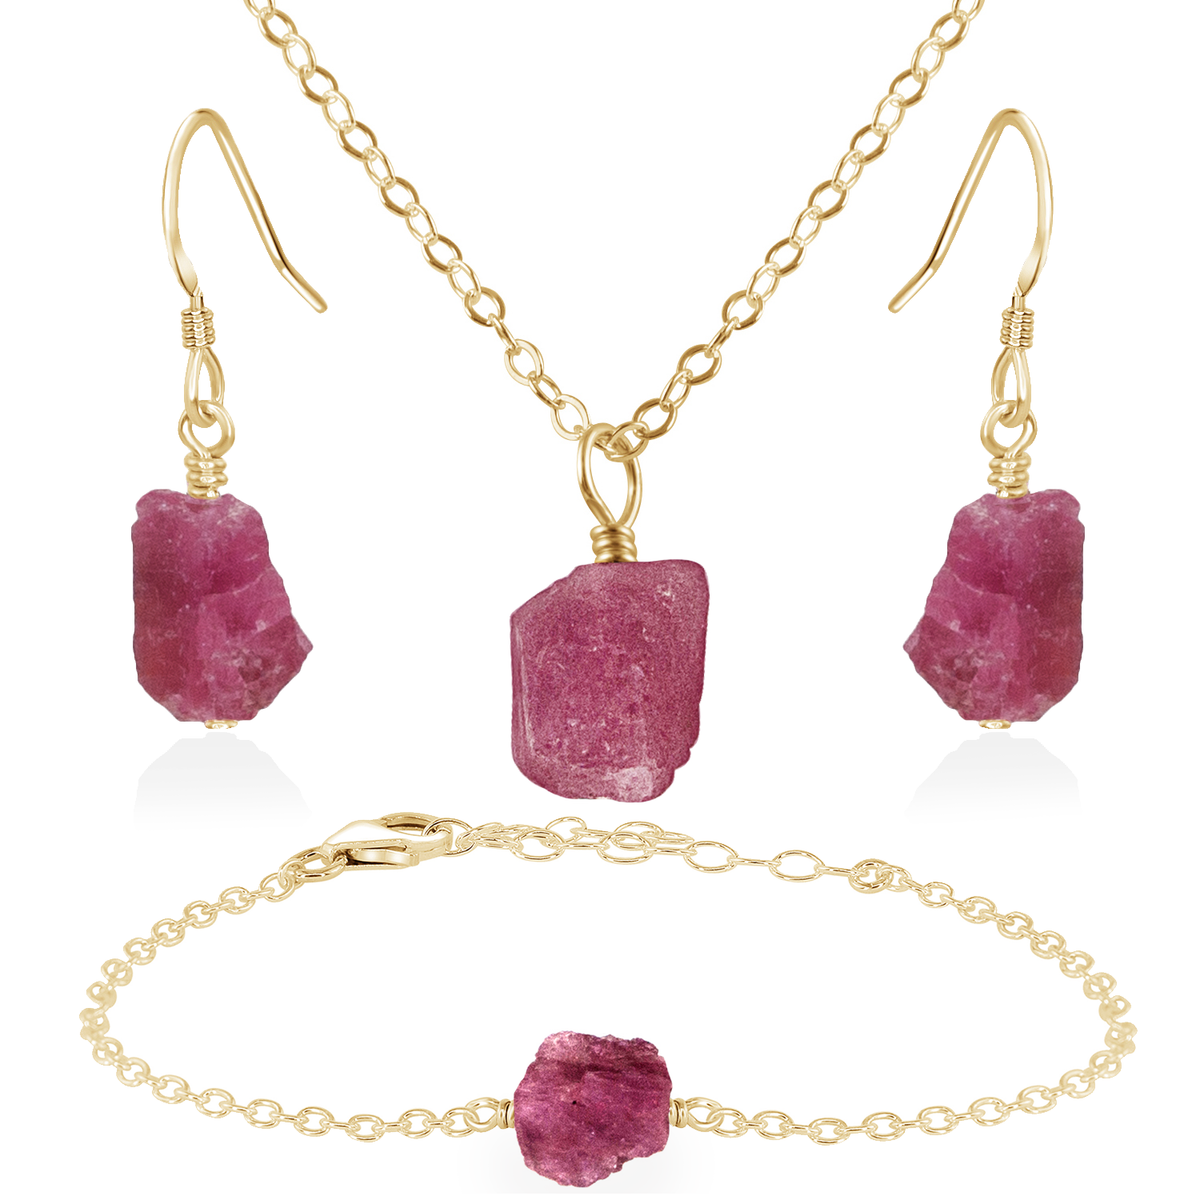 Raw Pink Tourmaline Crystal Jewellery Set - Raw Pink Tourmaline Crystal Jewellery Set - 14k Gold Fill / Cable / Necklace & Earrings & Bracelet - Luna Tide Handmade Crystal Jewellery